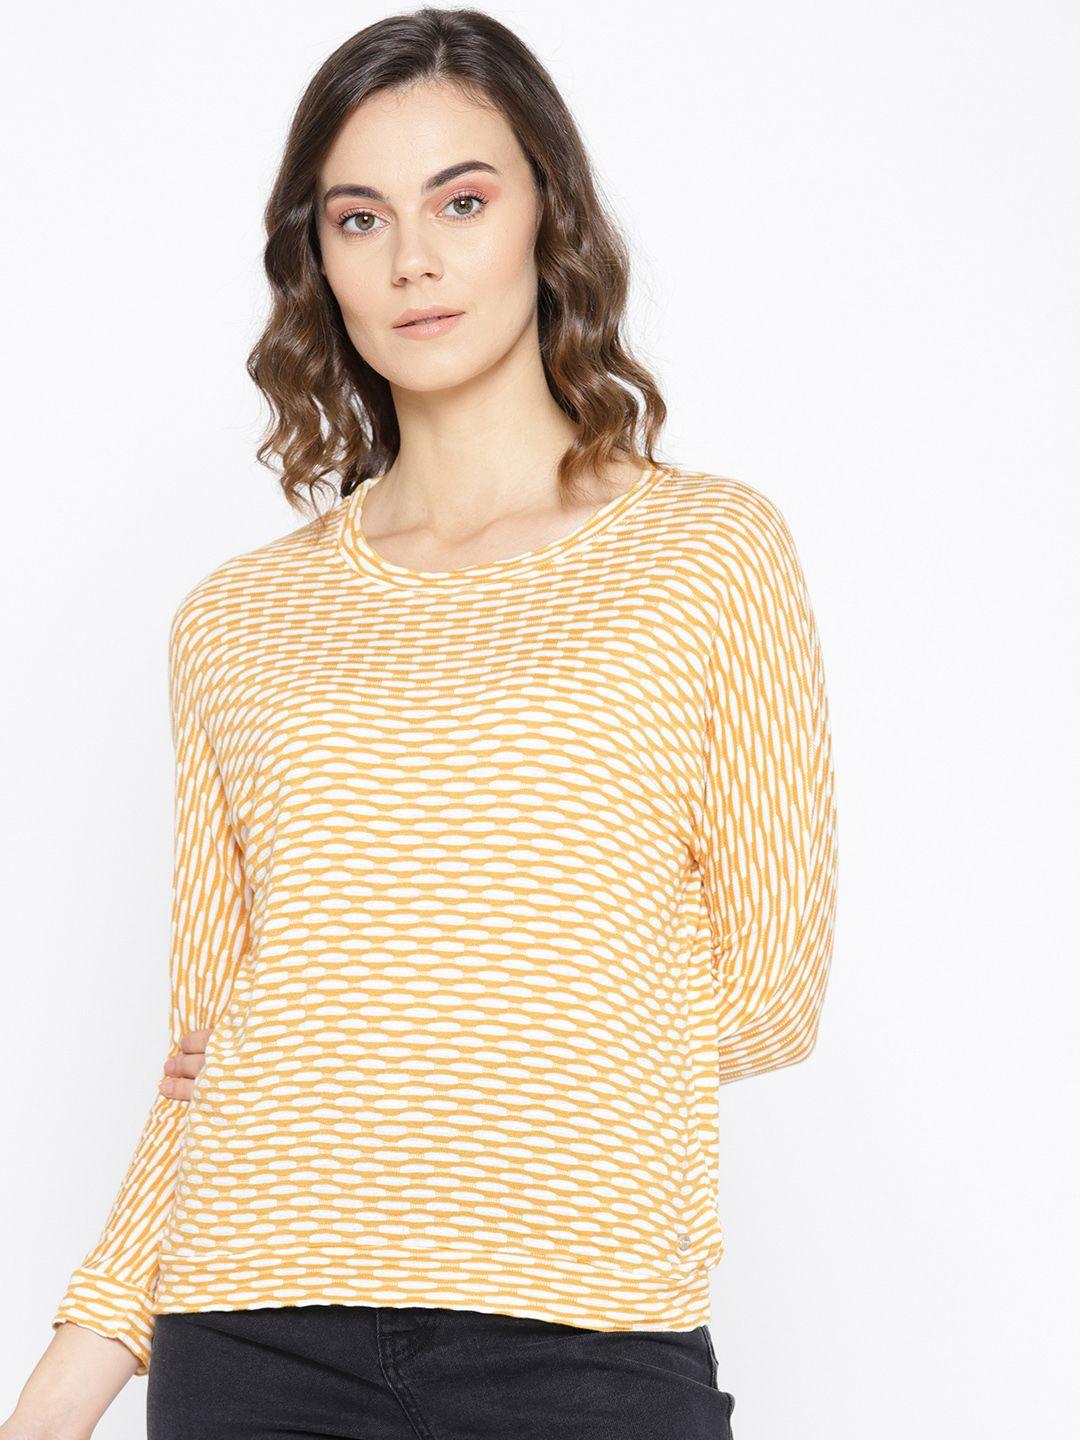 taanz women mustard yellow & white striped top